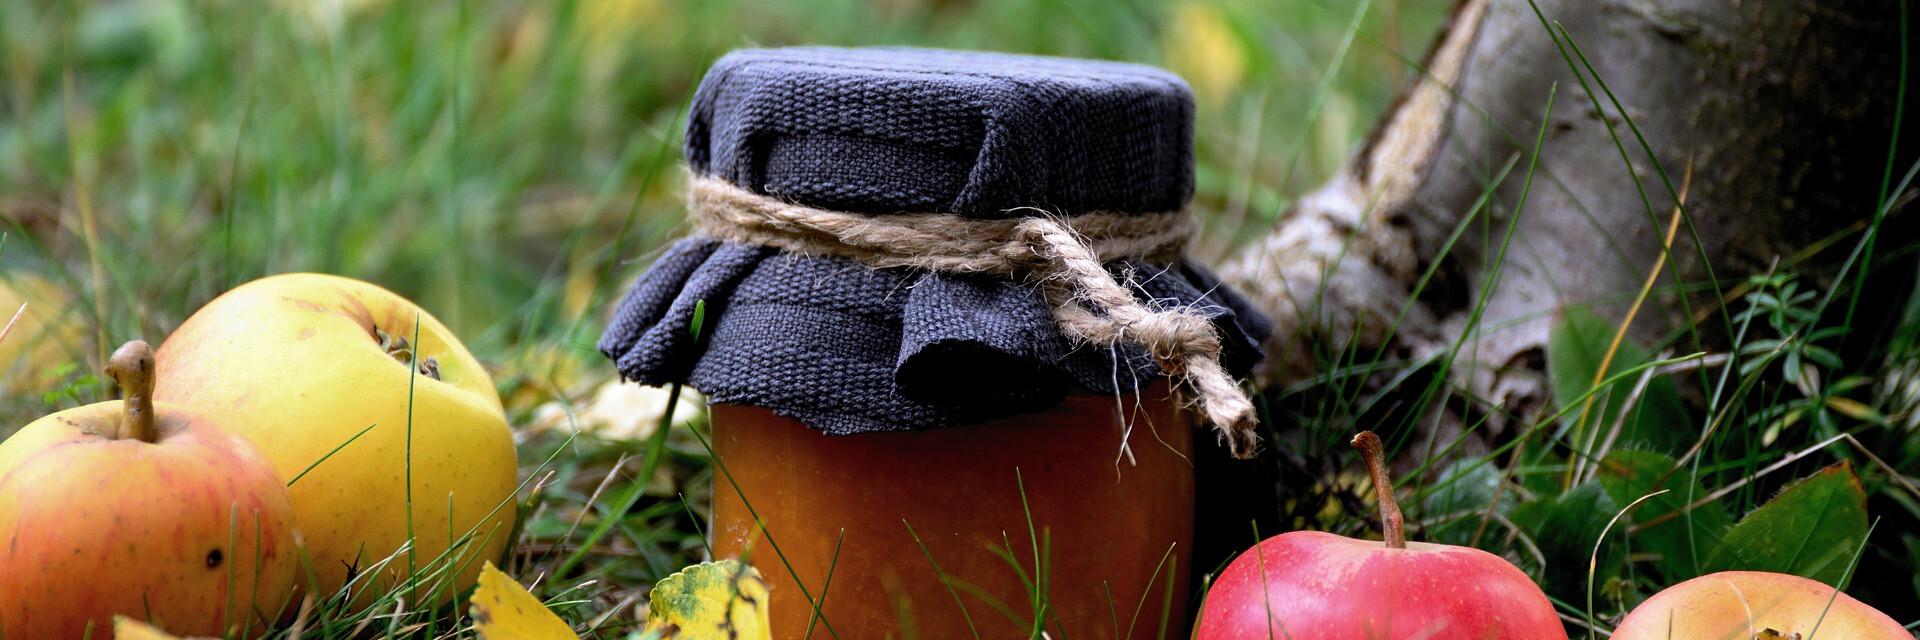 Äpfel, Baum, Marmelade | © Pixabay